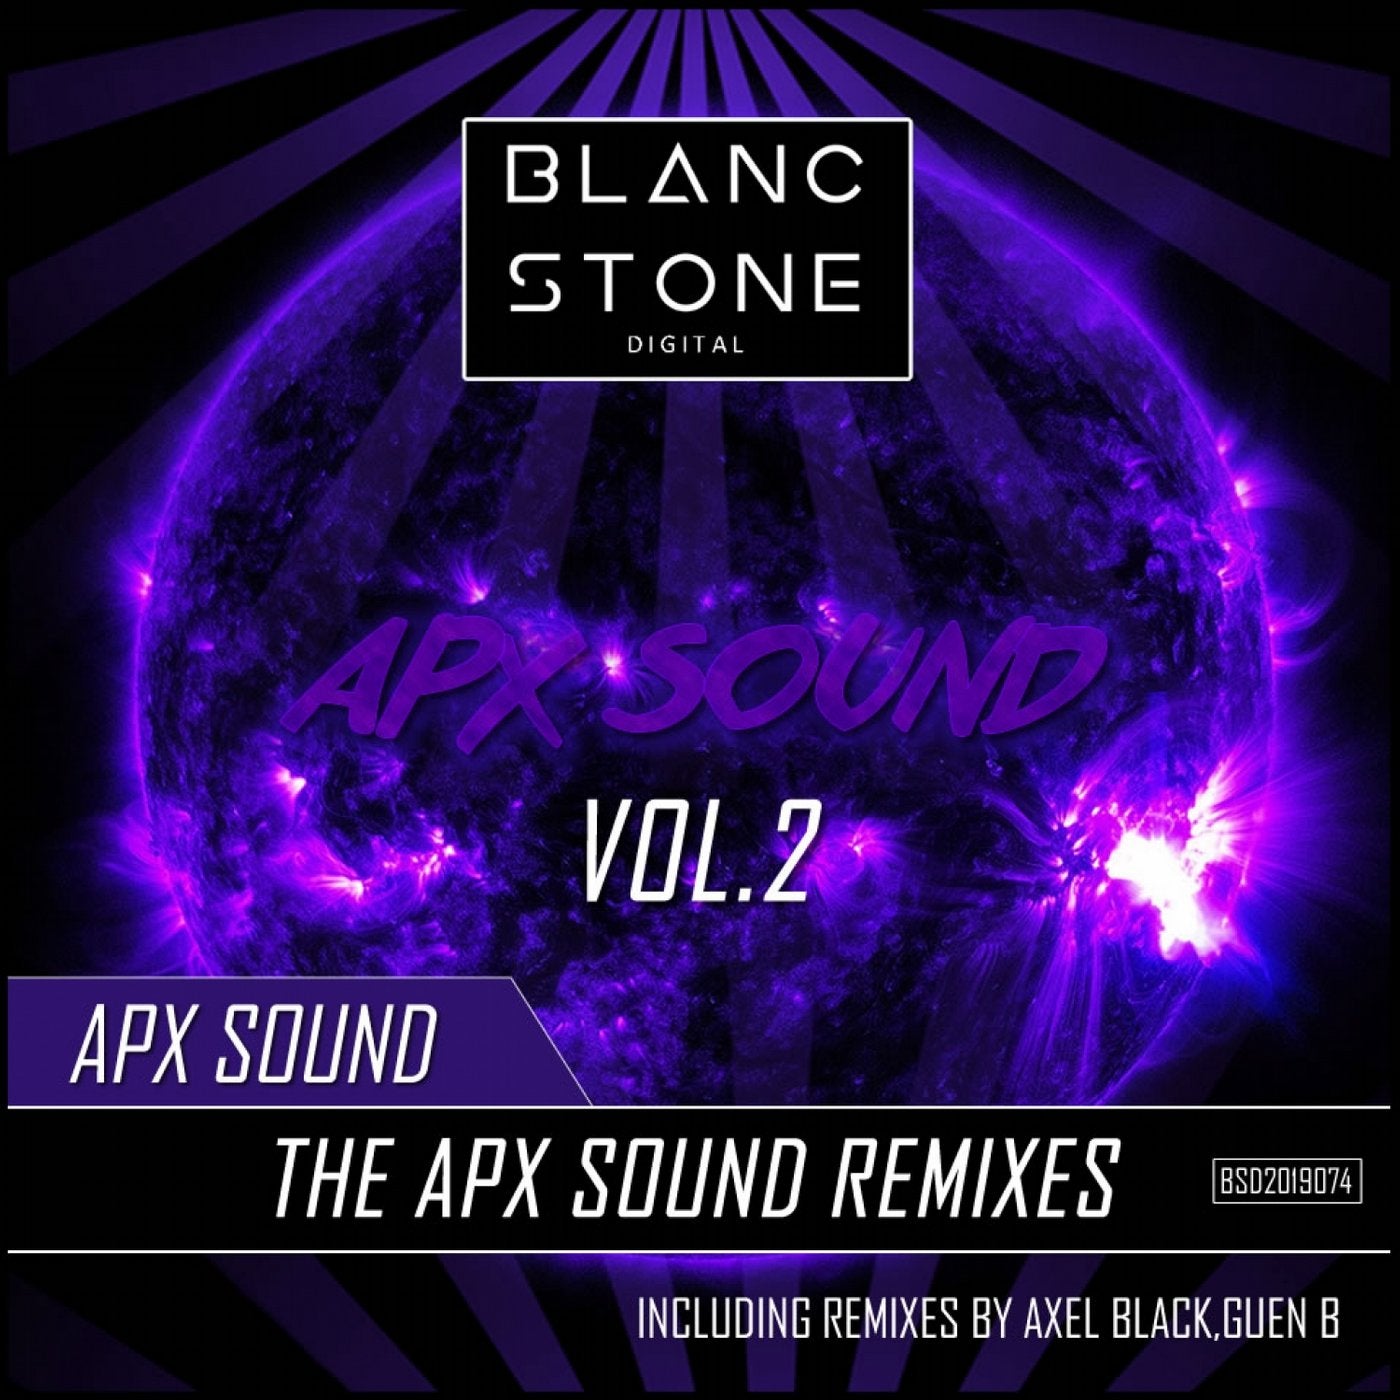 The Apx Sound Remixes Vol.2